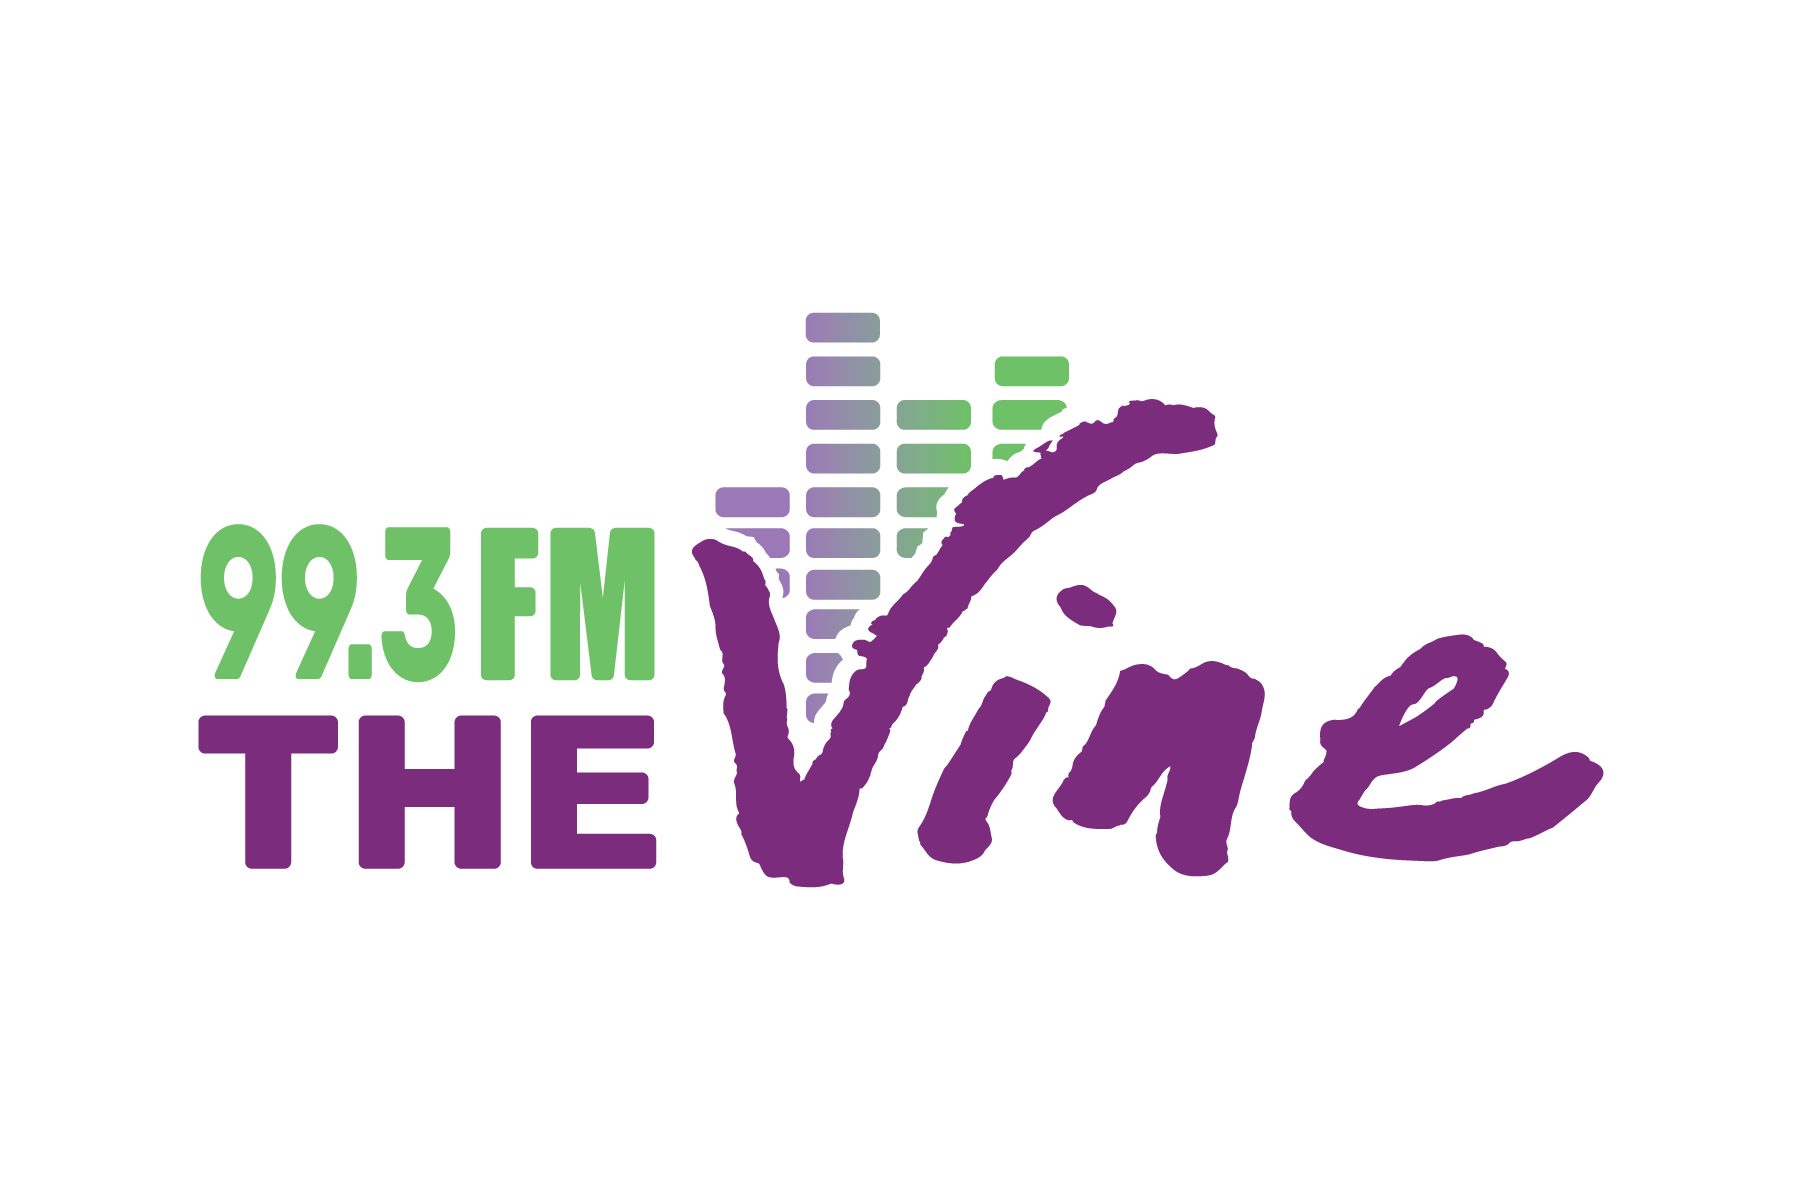 99.3 FM The Vine